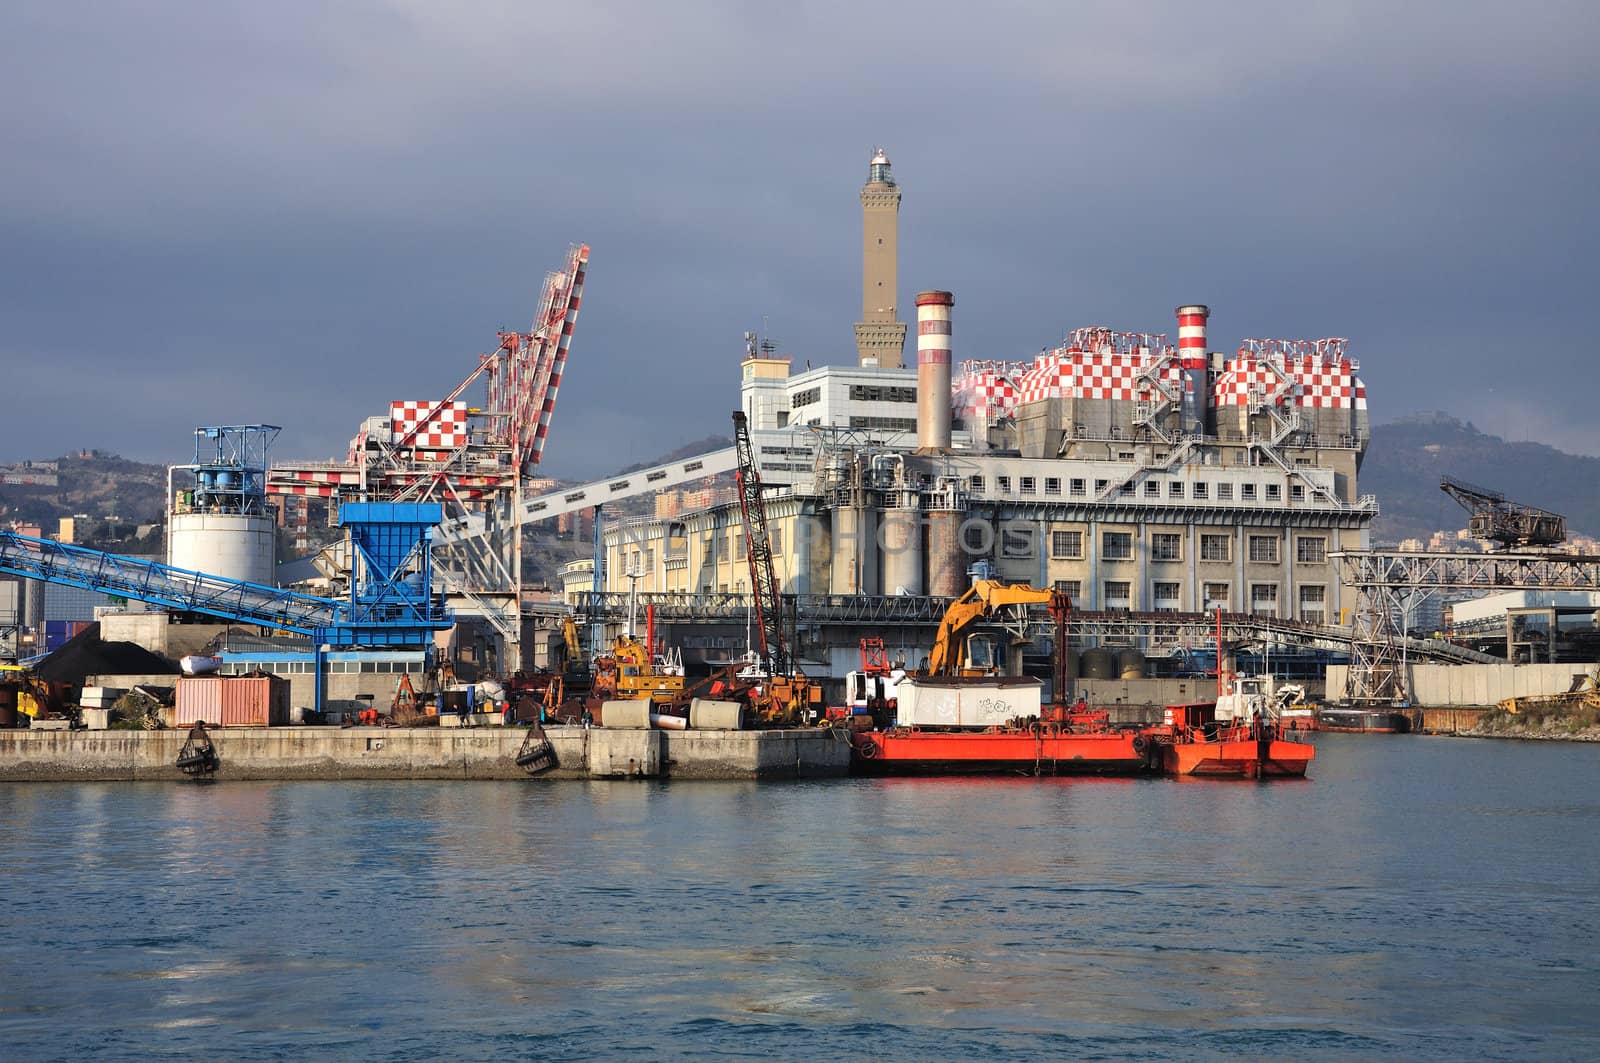 Cranes, boats, stock in Genoa.